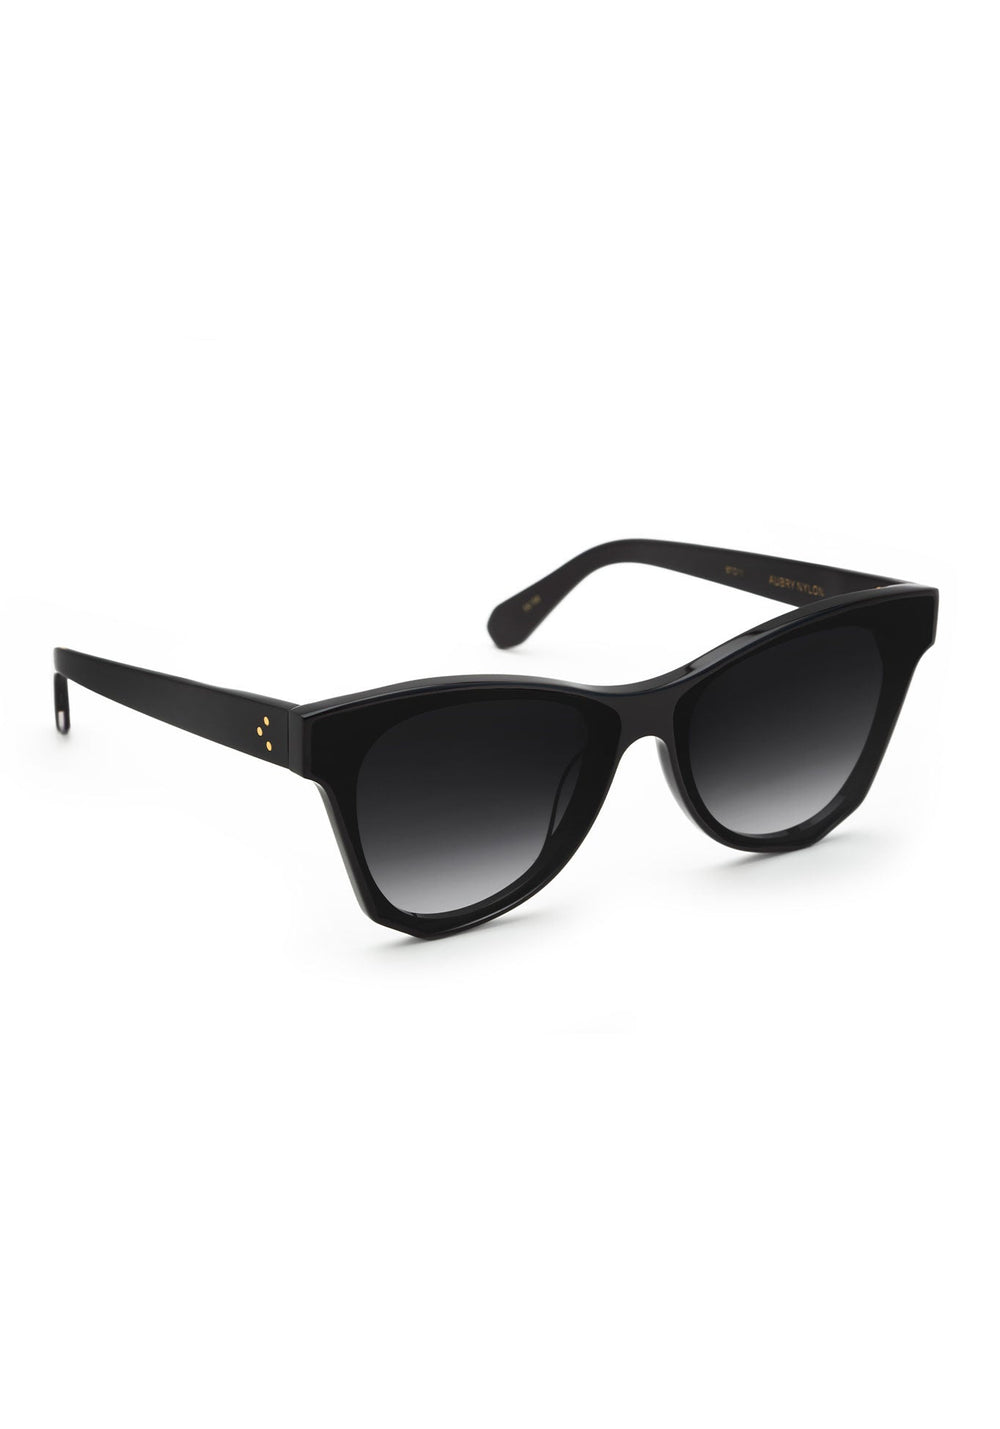 AUBRY NYLON | Black + Shadow Handcrafted, luxury black acetate KREWE sunglasses